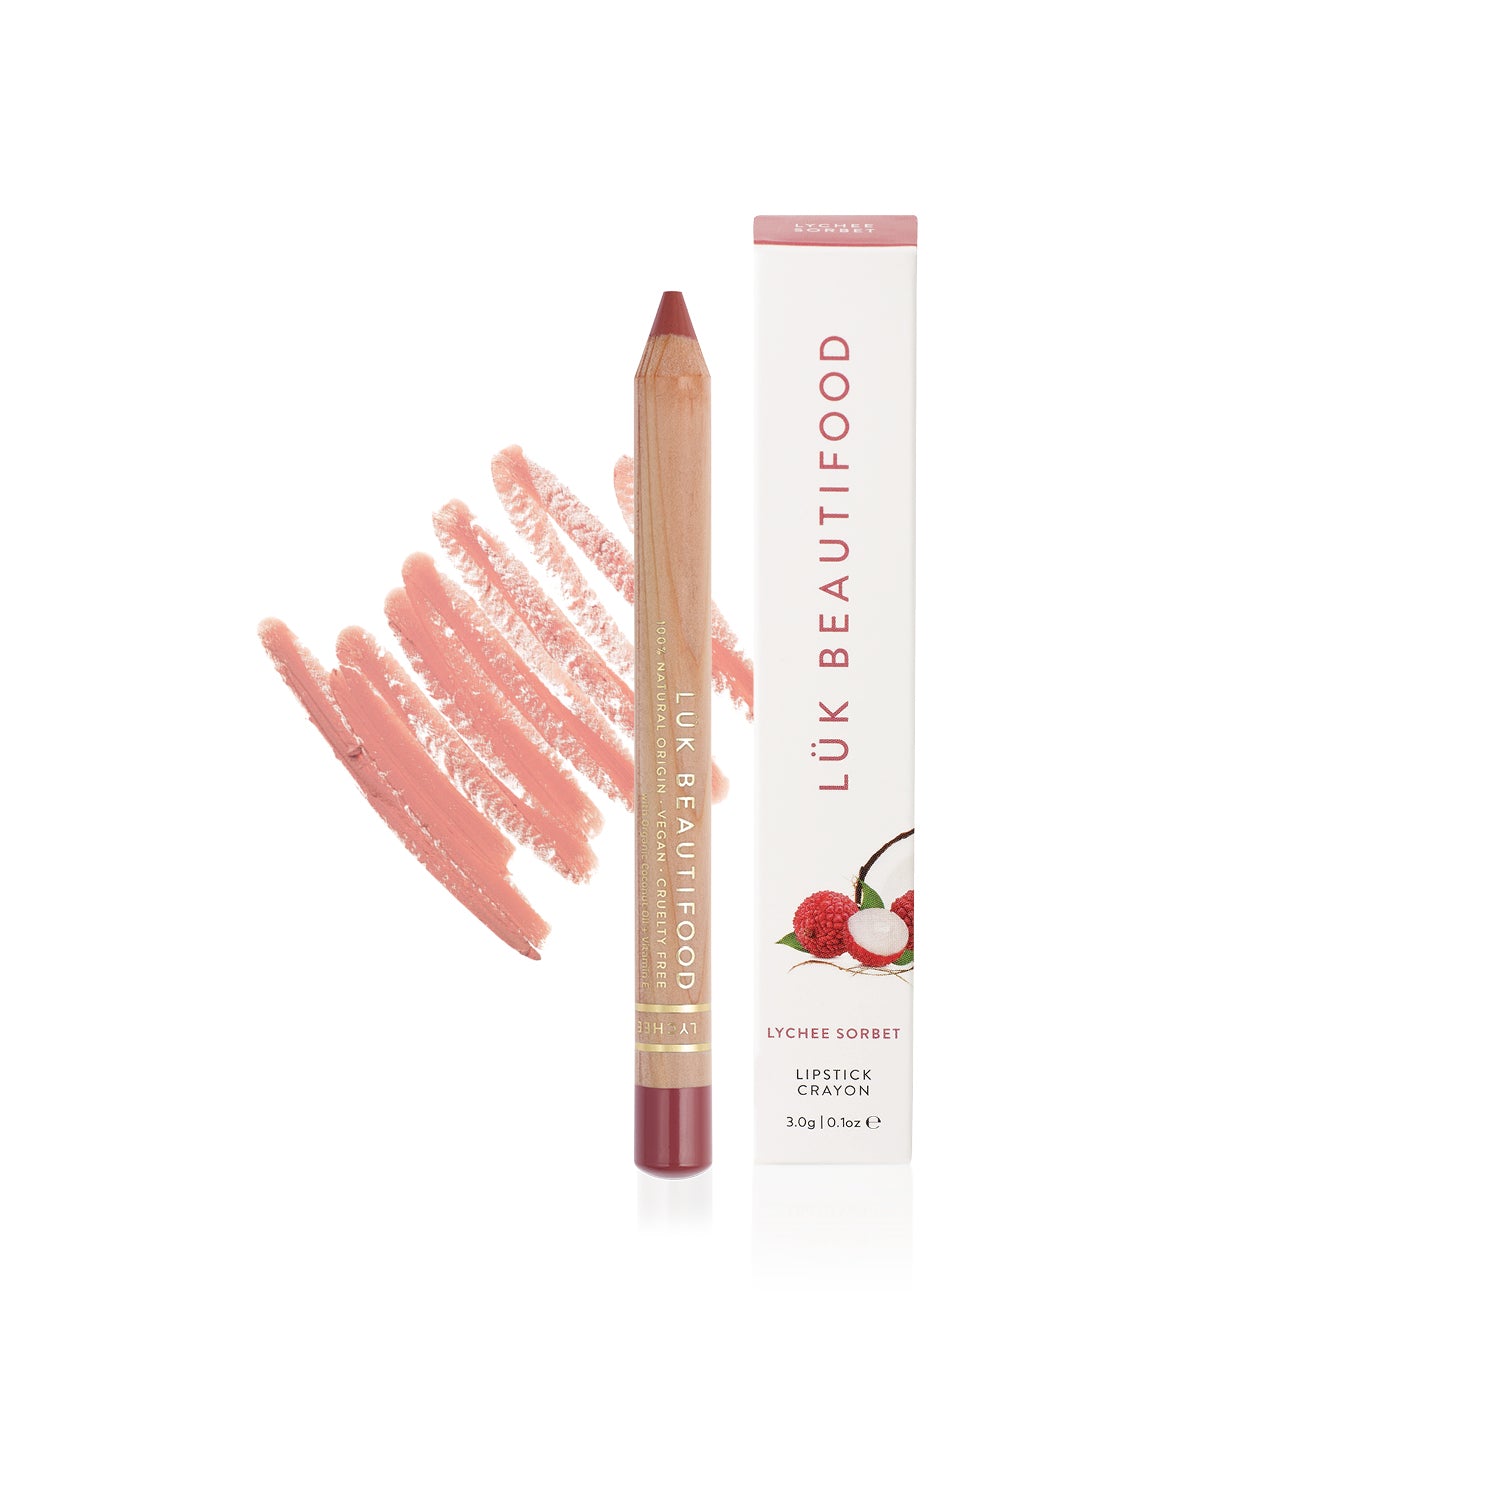 Luk Beautifood Natural Lipstick Crayon & lip liner in neutral shade Lychee Sorbet Vegan. Sustainable Beauty Packaging. Vegan